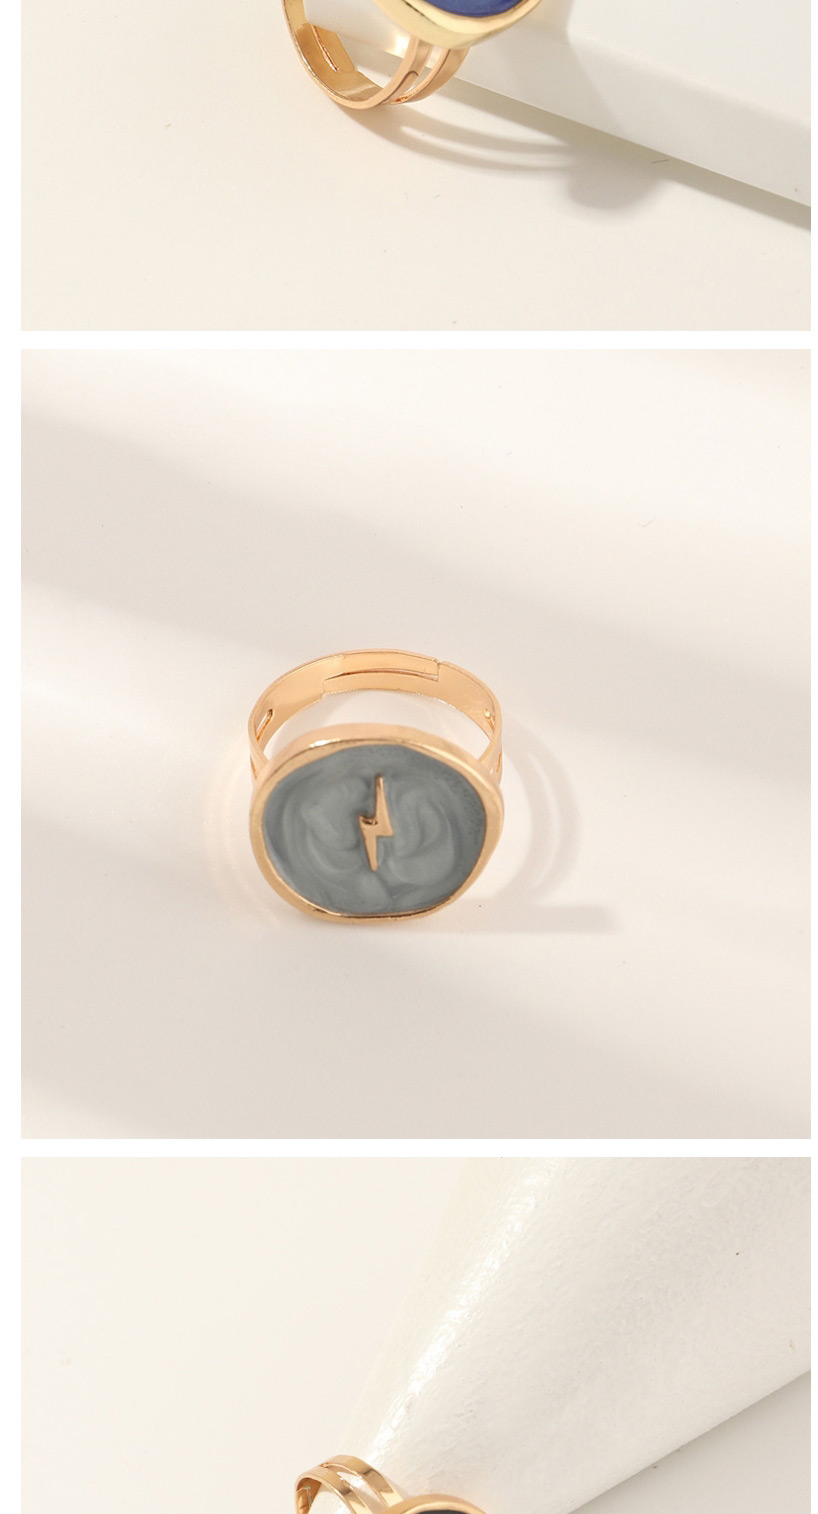 Fashion Royal blue Alloy Dripping Moon Geometric Round Ring,Fashion Rings